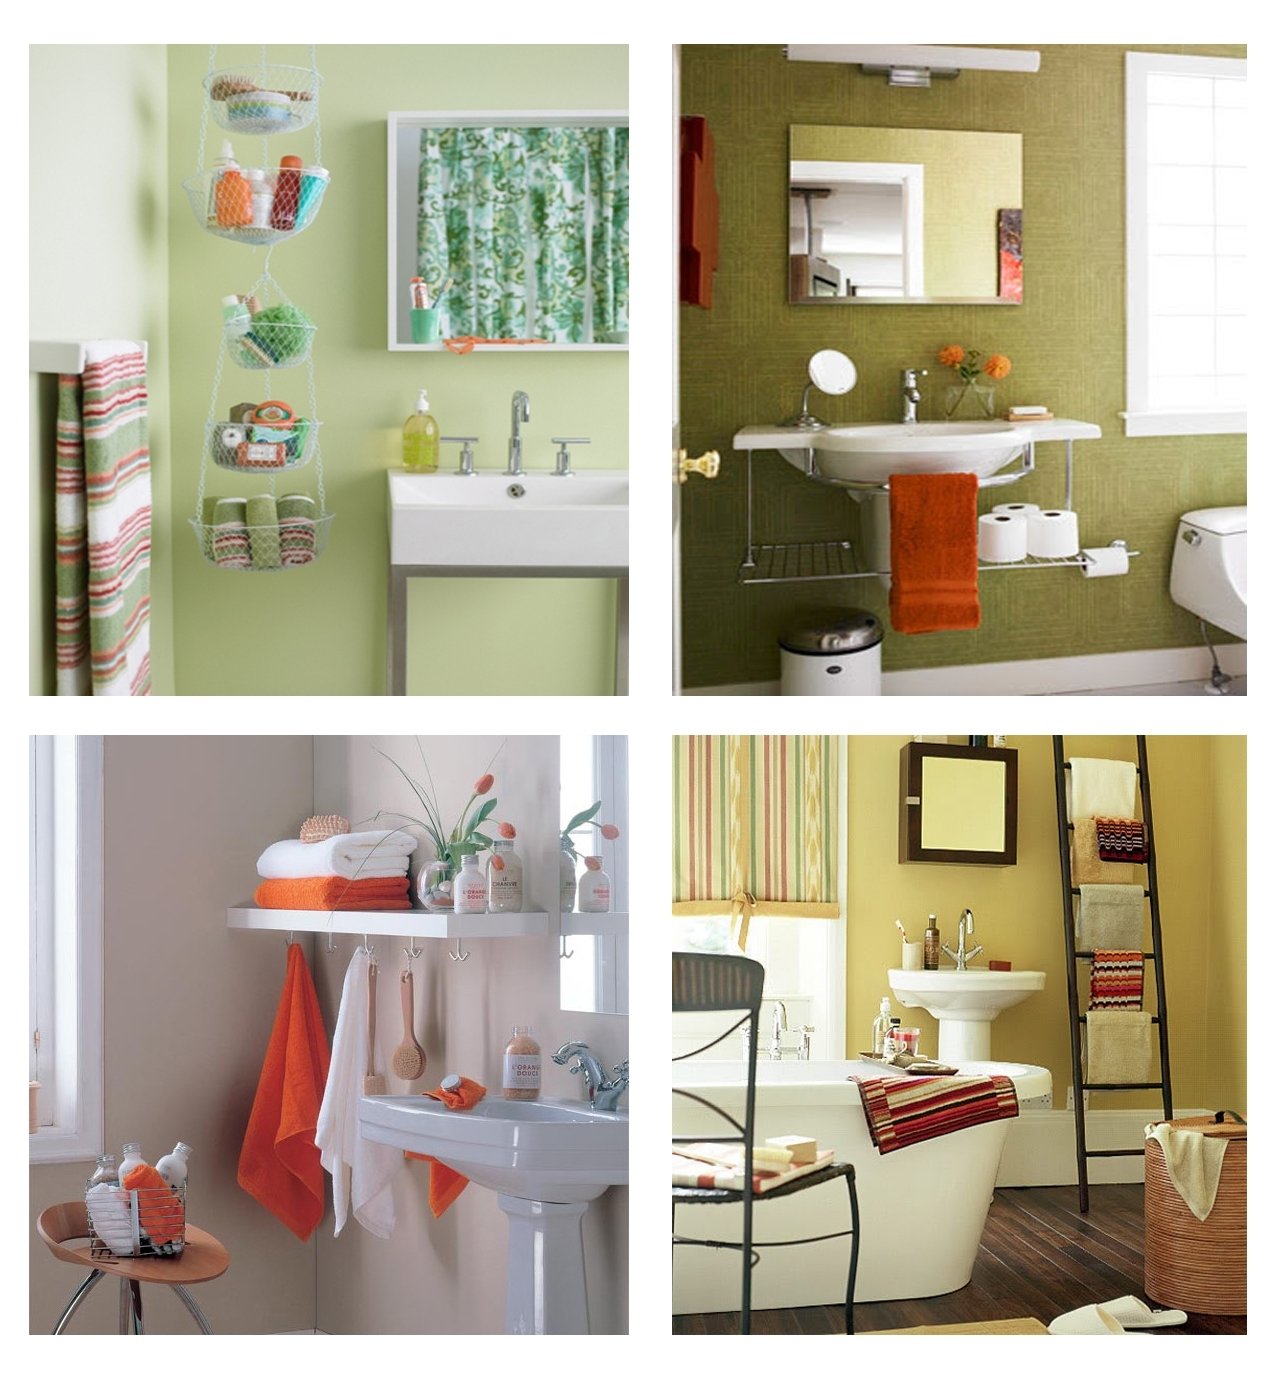 10 Perfect Creative Storage Ideas For Small Bedrooms small bathroom storage ideas decobizz 2023